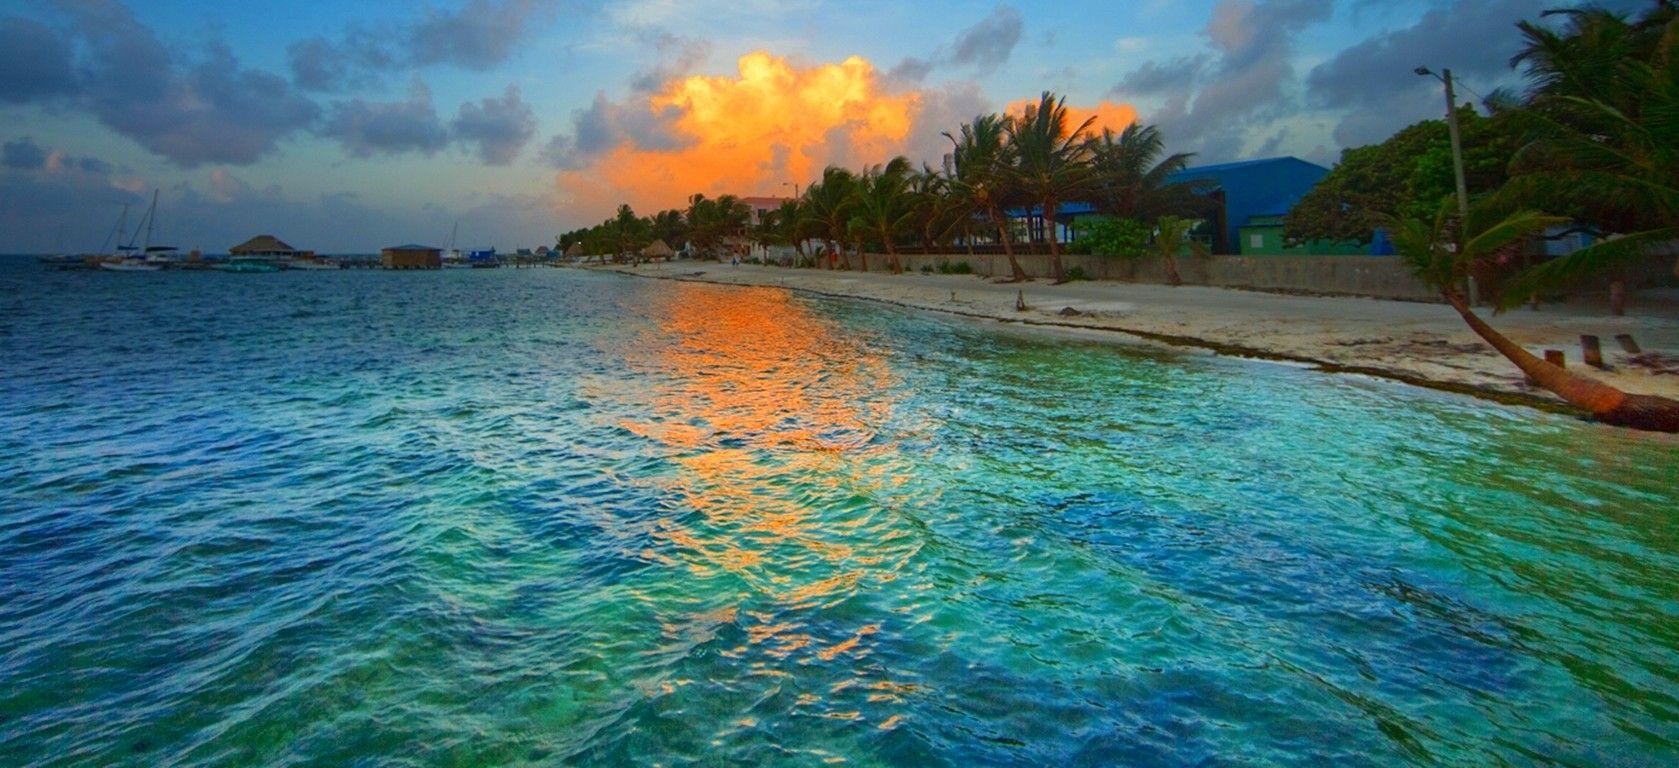 Belize Tag wallpaper: Sea Walkway Islands Palm Beach Tropical Trees